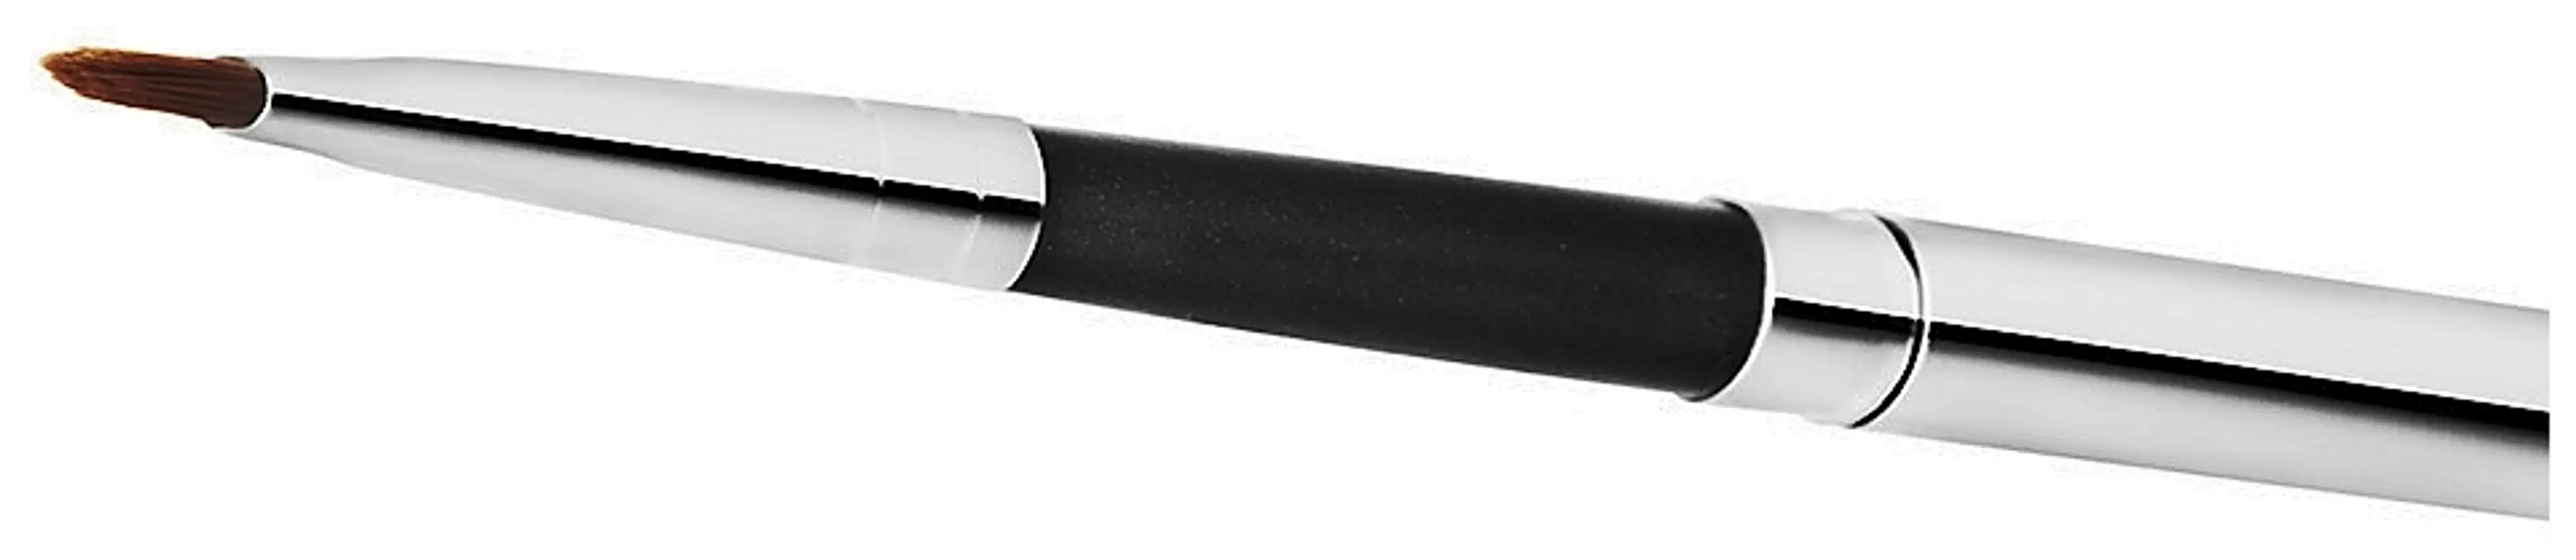 MAC Lip / Covered Brush 316 sivellin